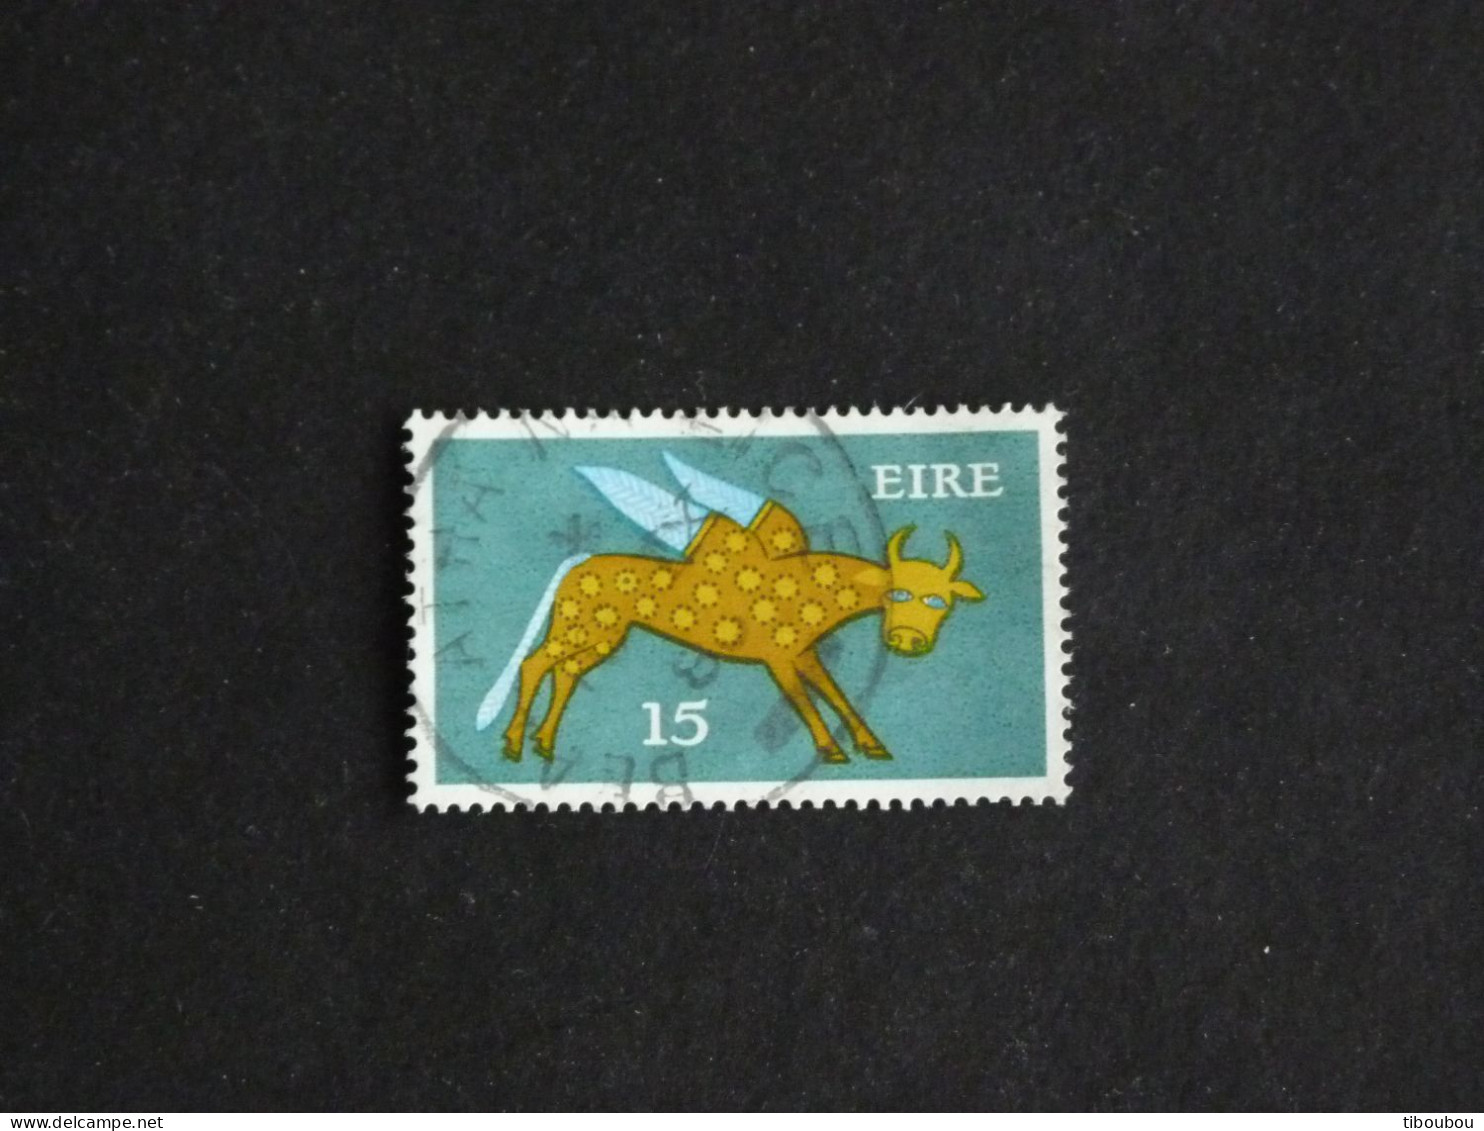 IRLANDE IRELAND EIRE YT 322 OBLITERE - BOEUF AILE SYMBOLE DE SAINT LUC - Used Stamps